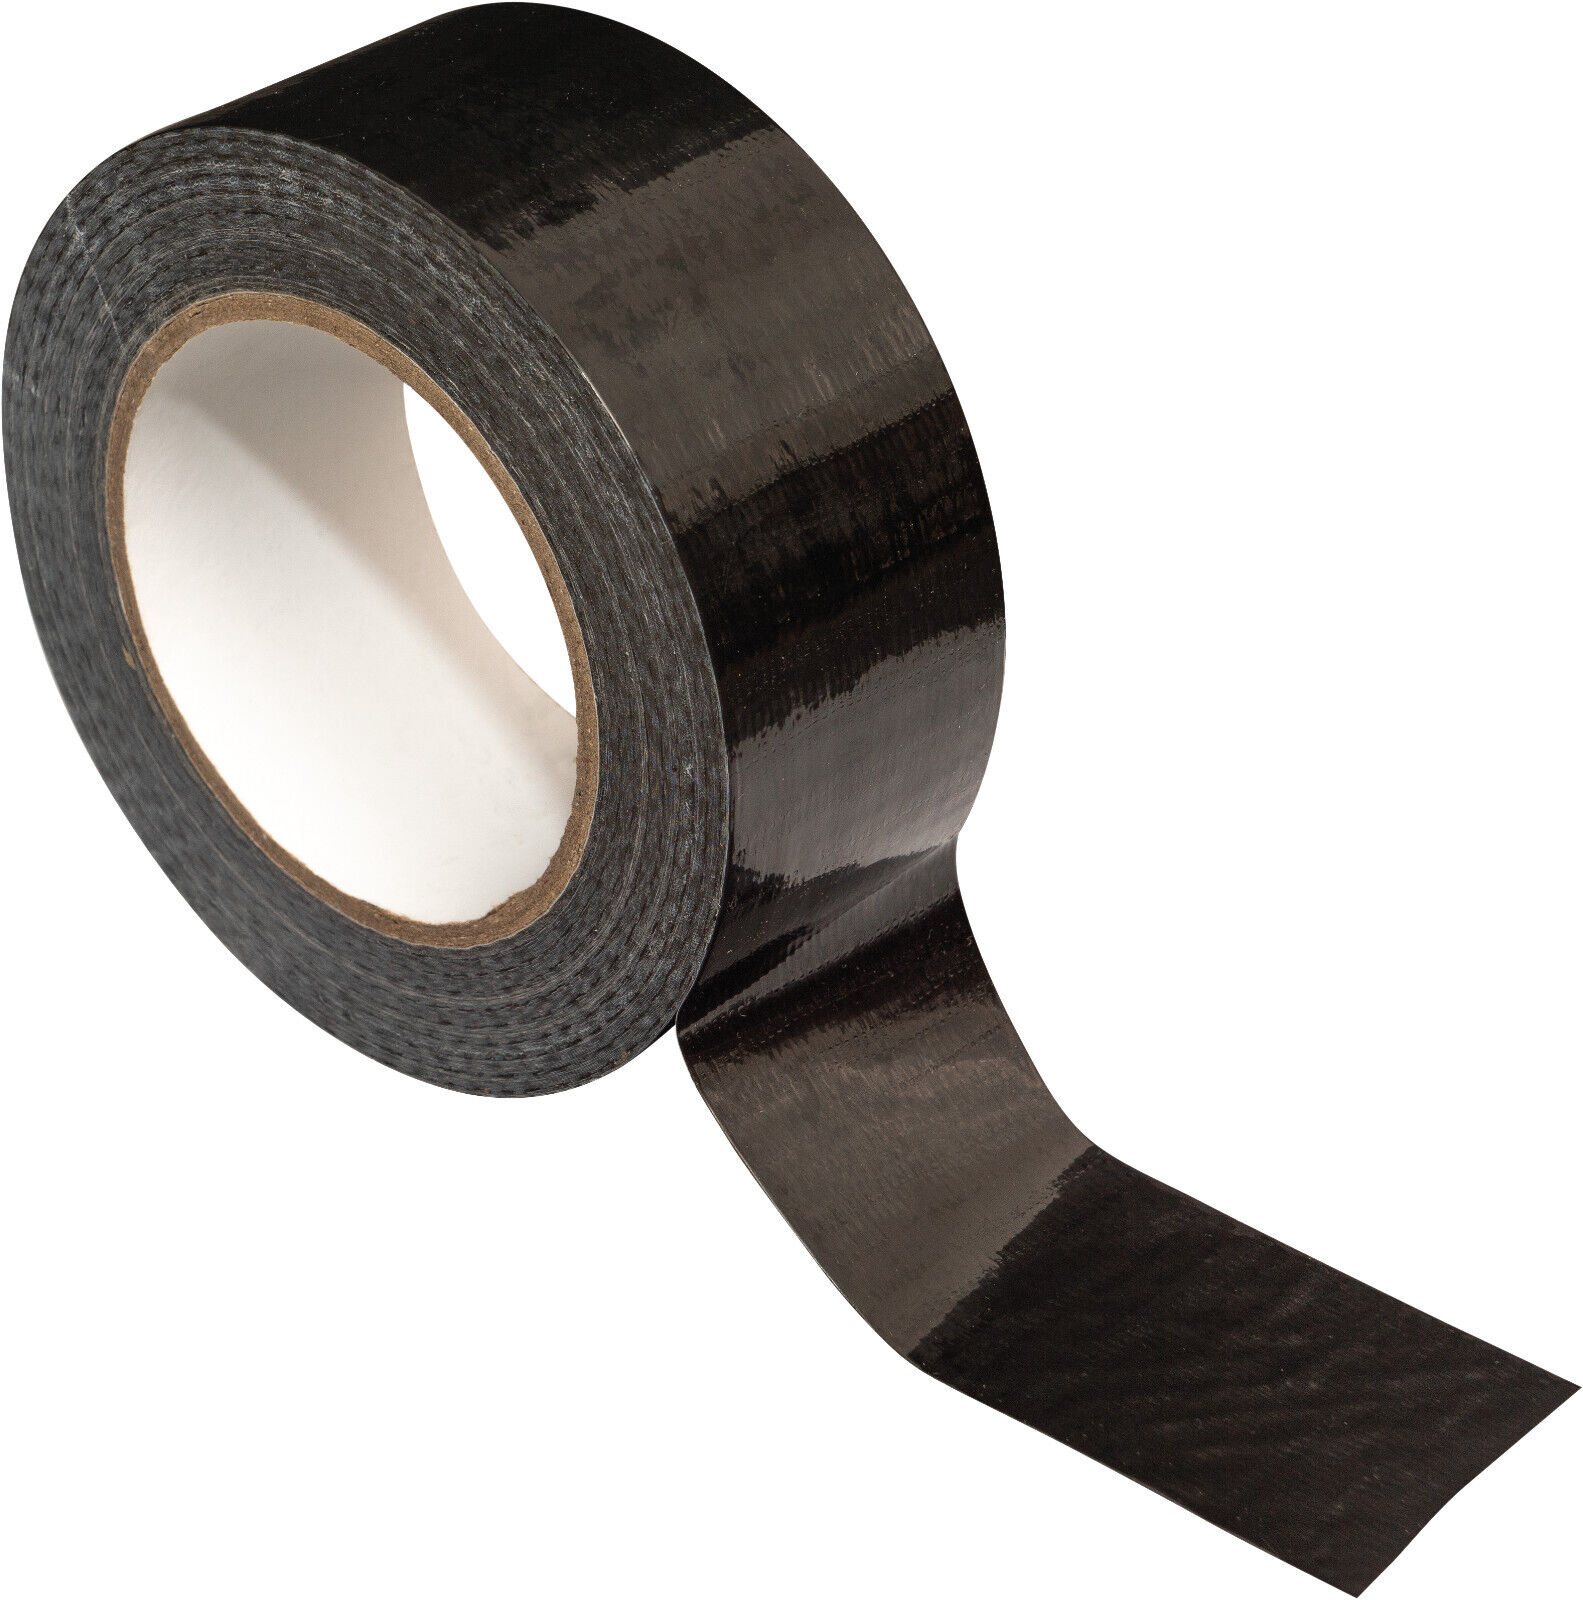 General Purpose Duct Tape 50mm x 50m Black